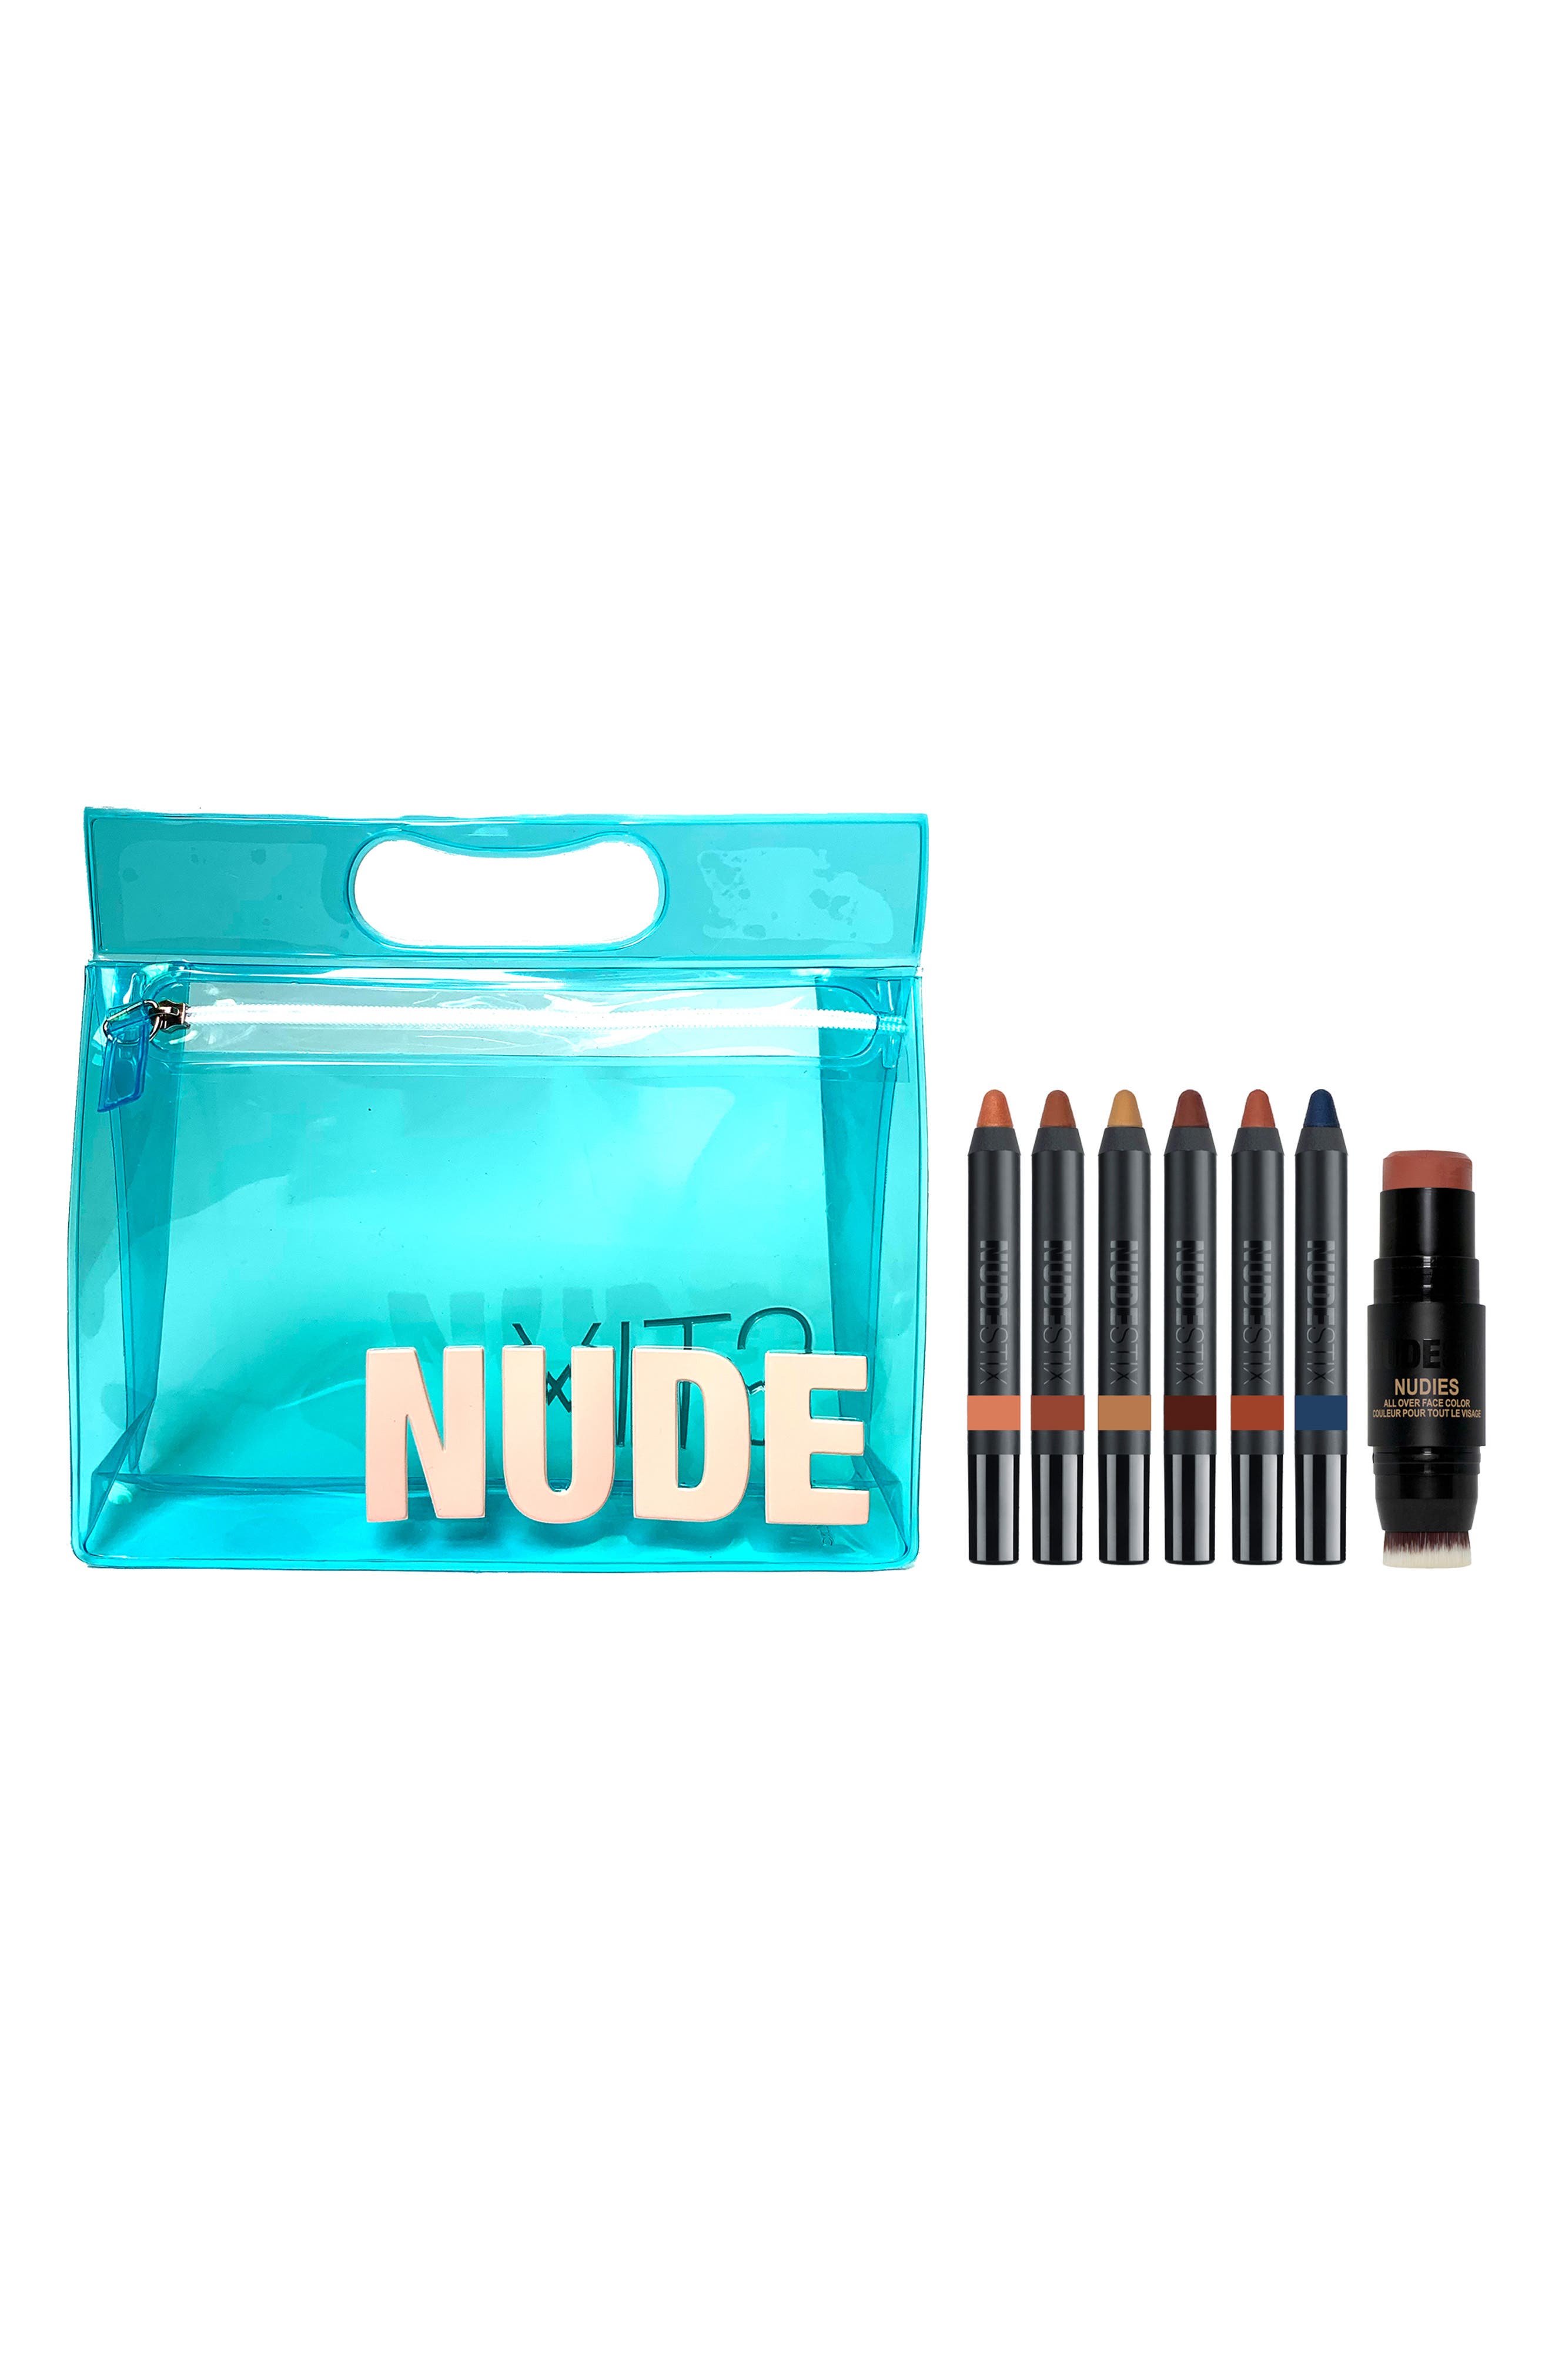 Petite at nude beach - Hot Nude